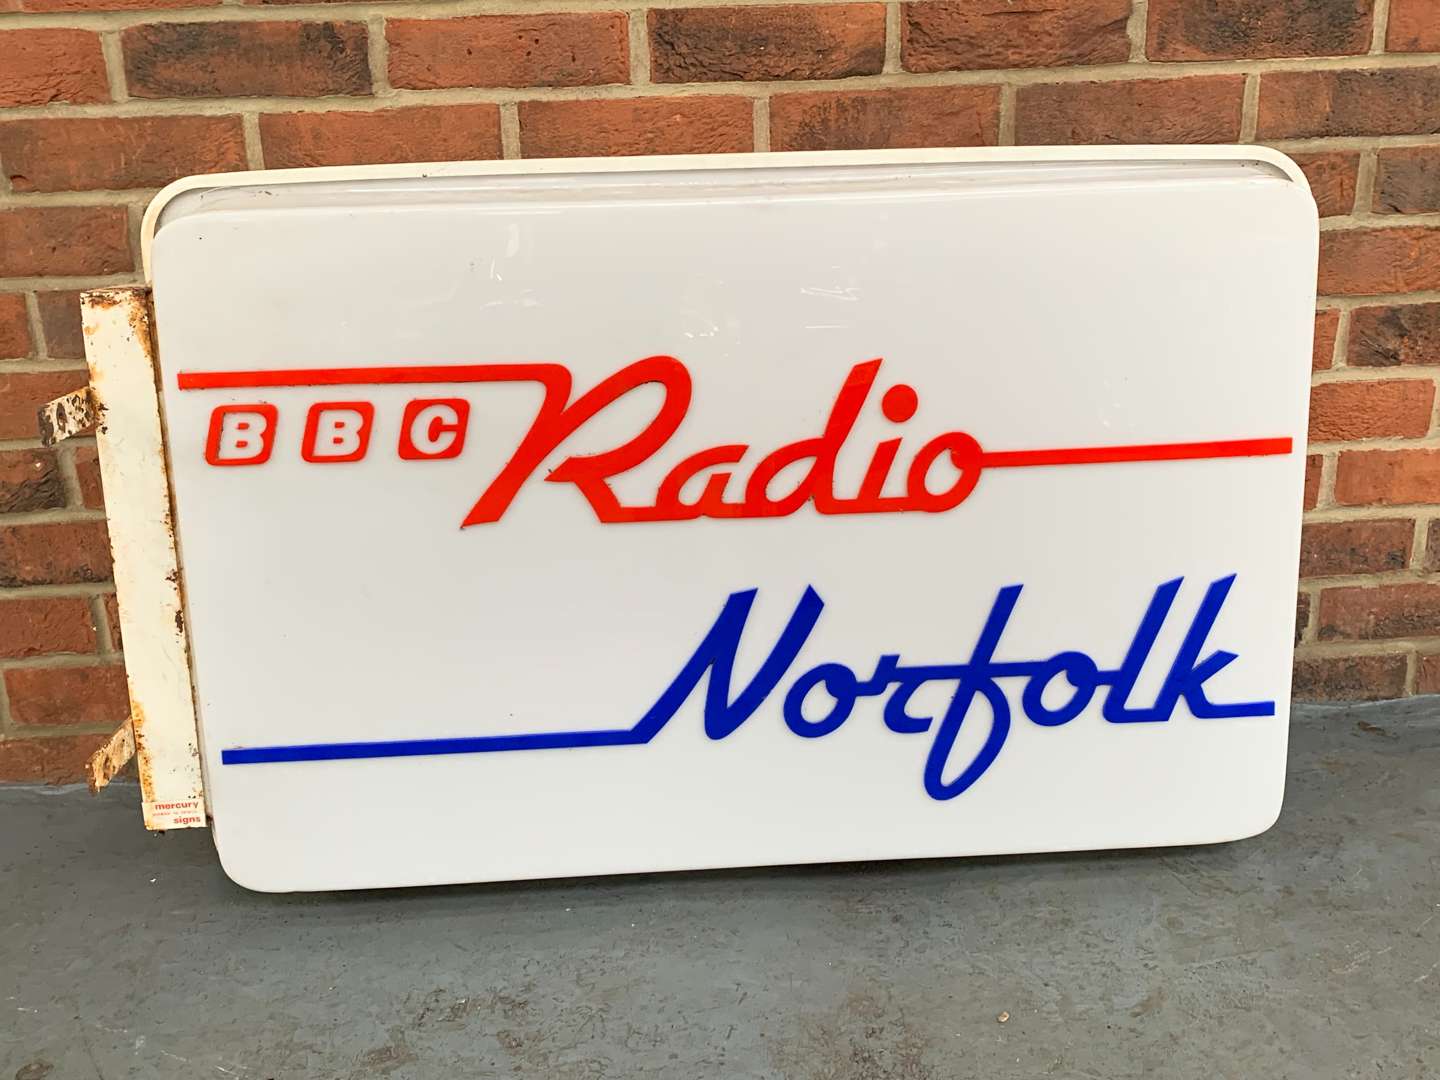 <p>Original 1980's Wall Mounted Illuminated “BBC Radio Norfolk” Sign</p>